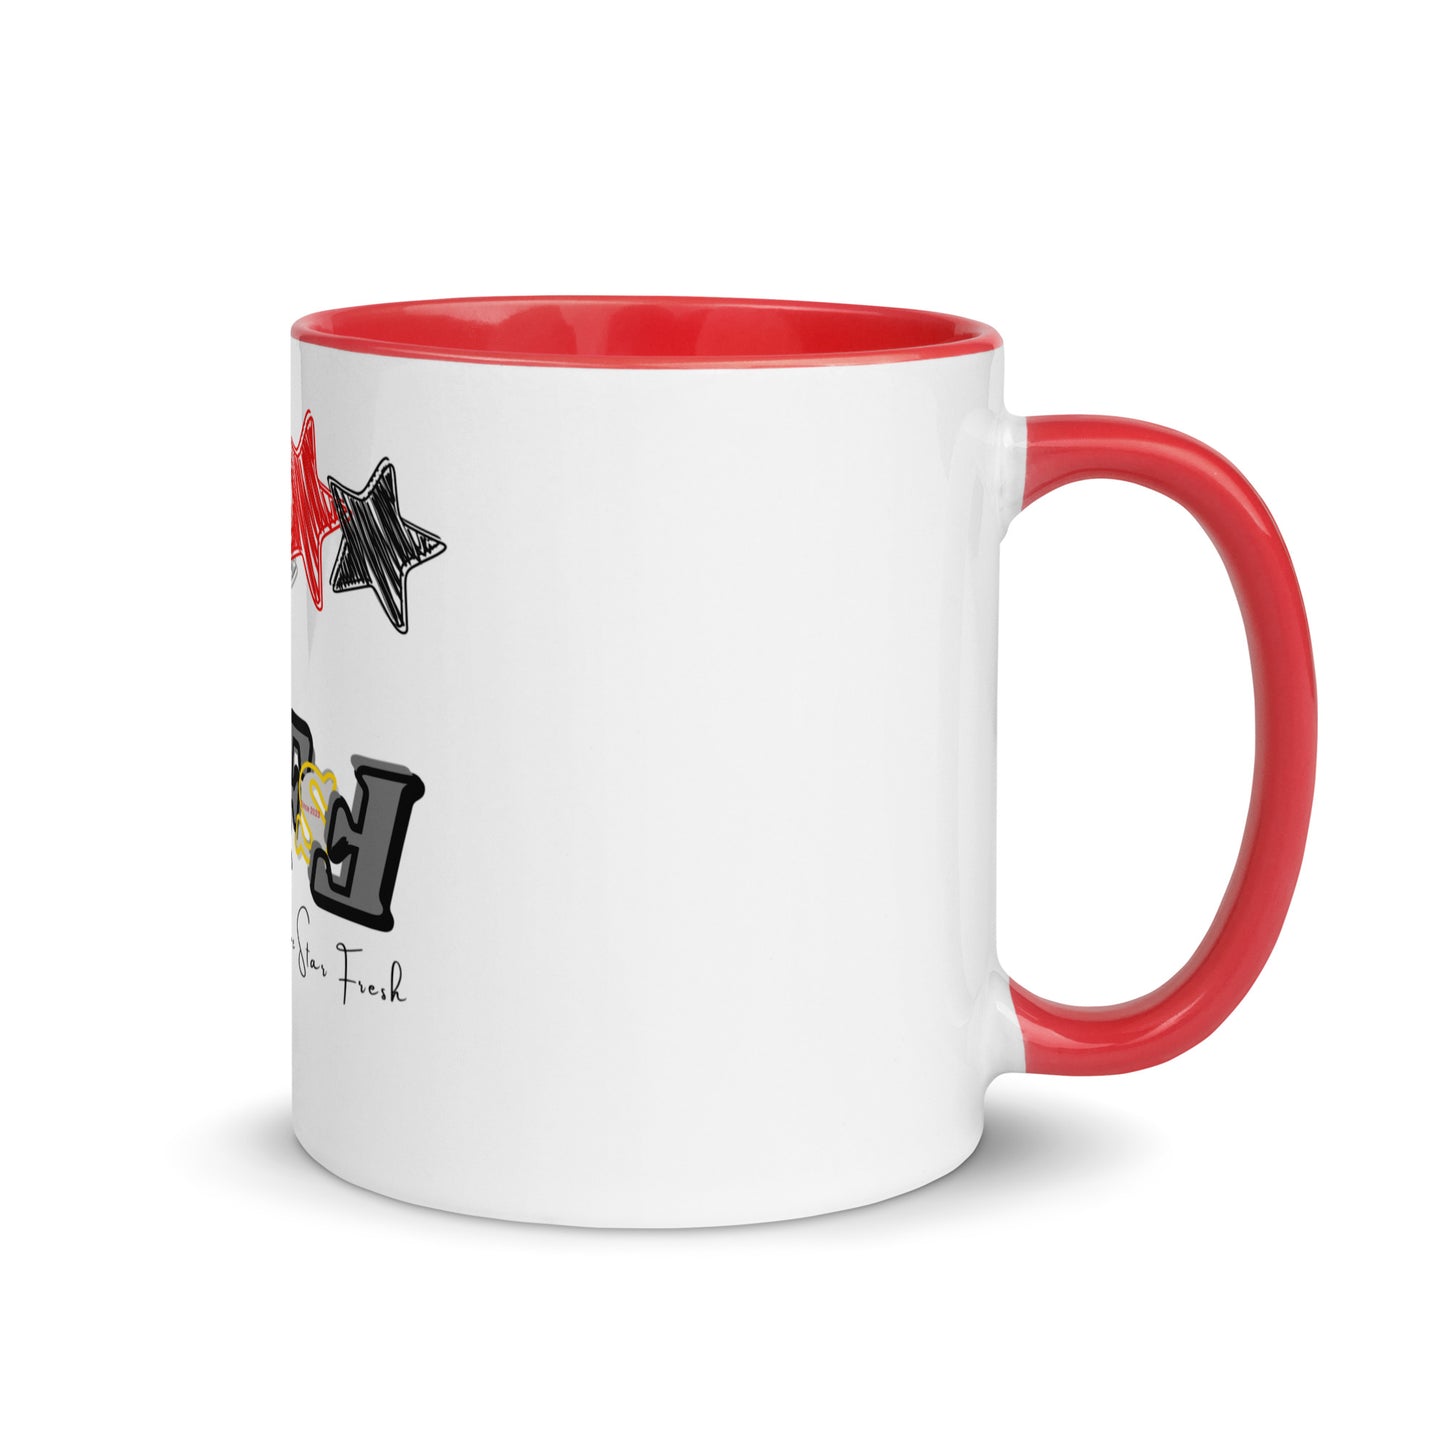 'Rising Star' Dark - Five Star Fresh Mug with Color Inside